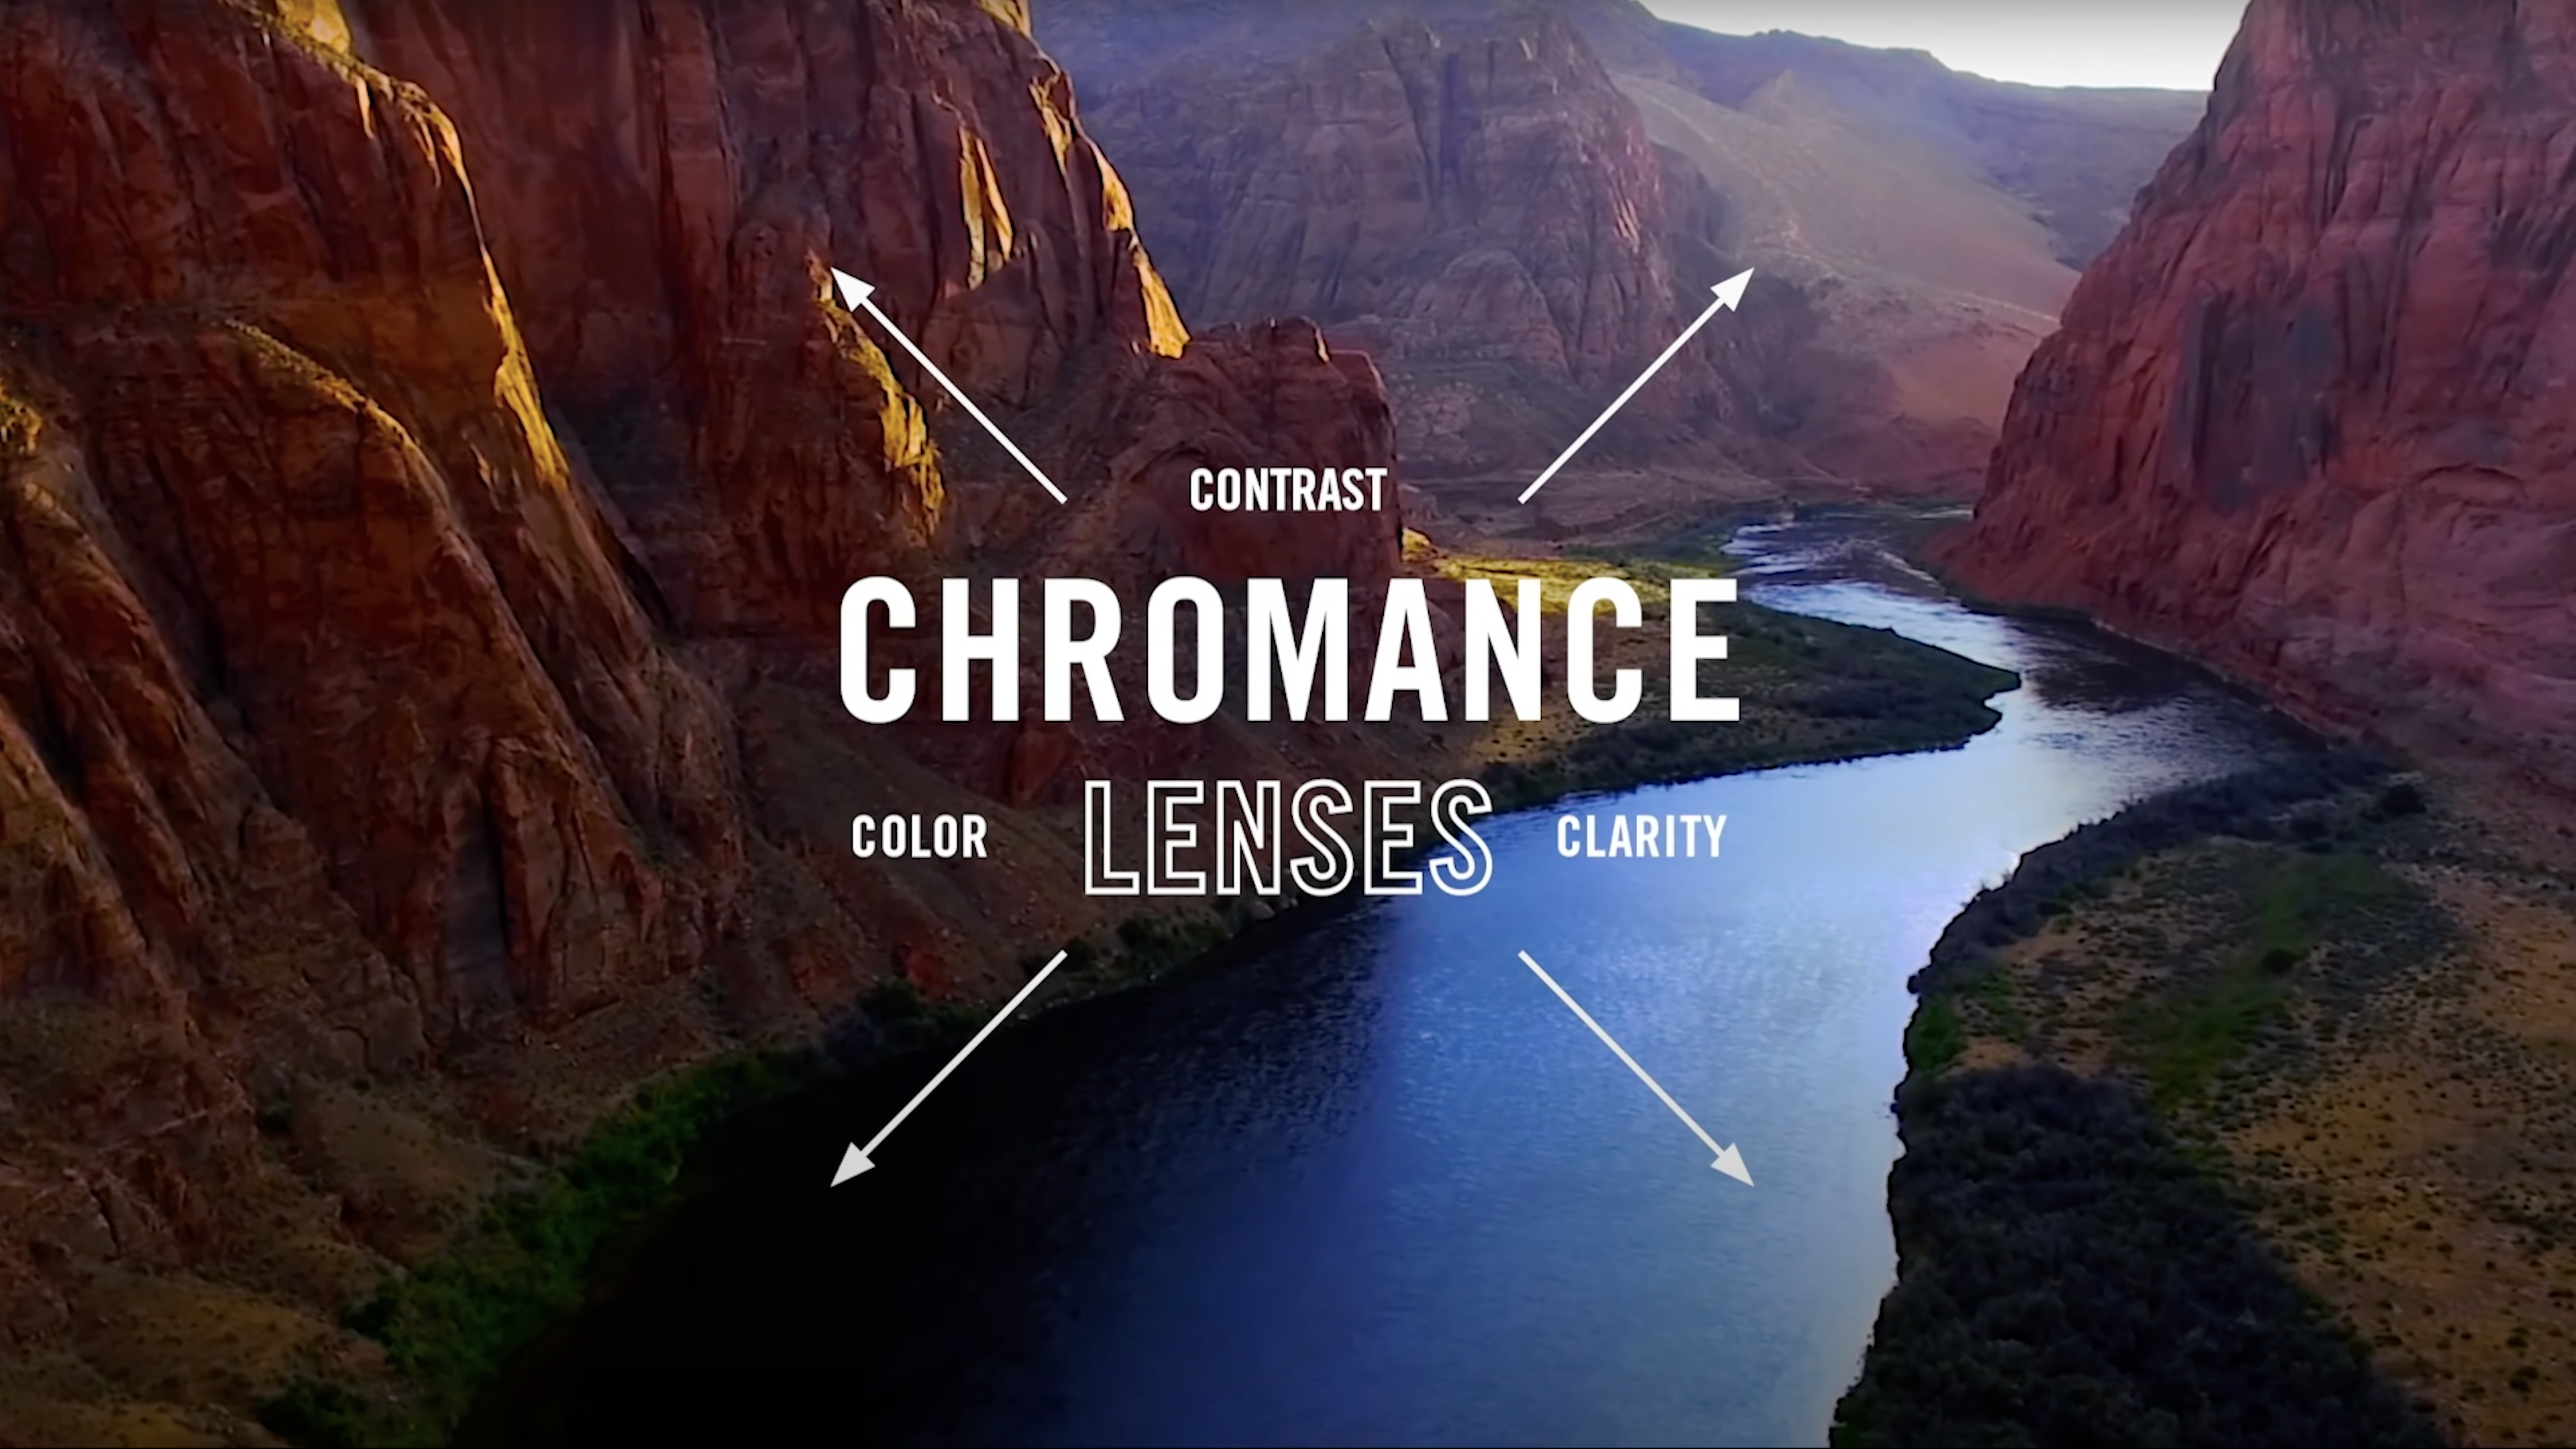 Ray-Ban Chromance Lens Technology